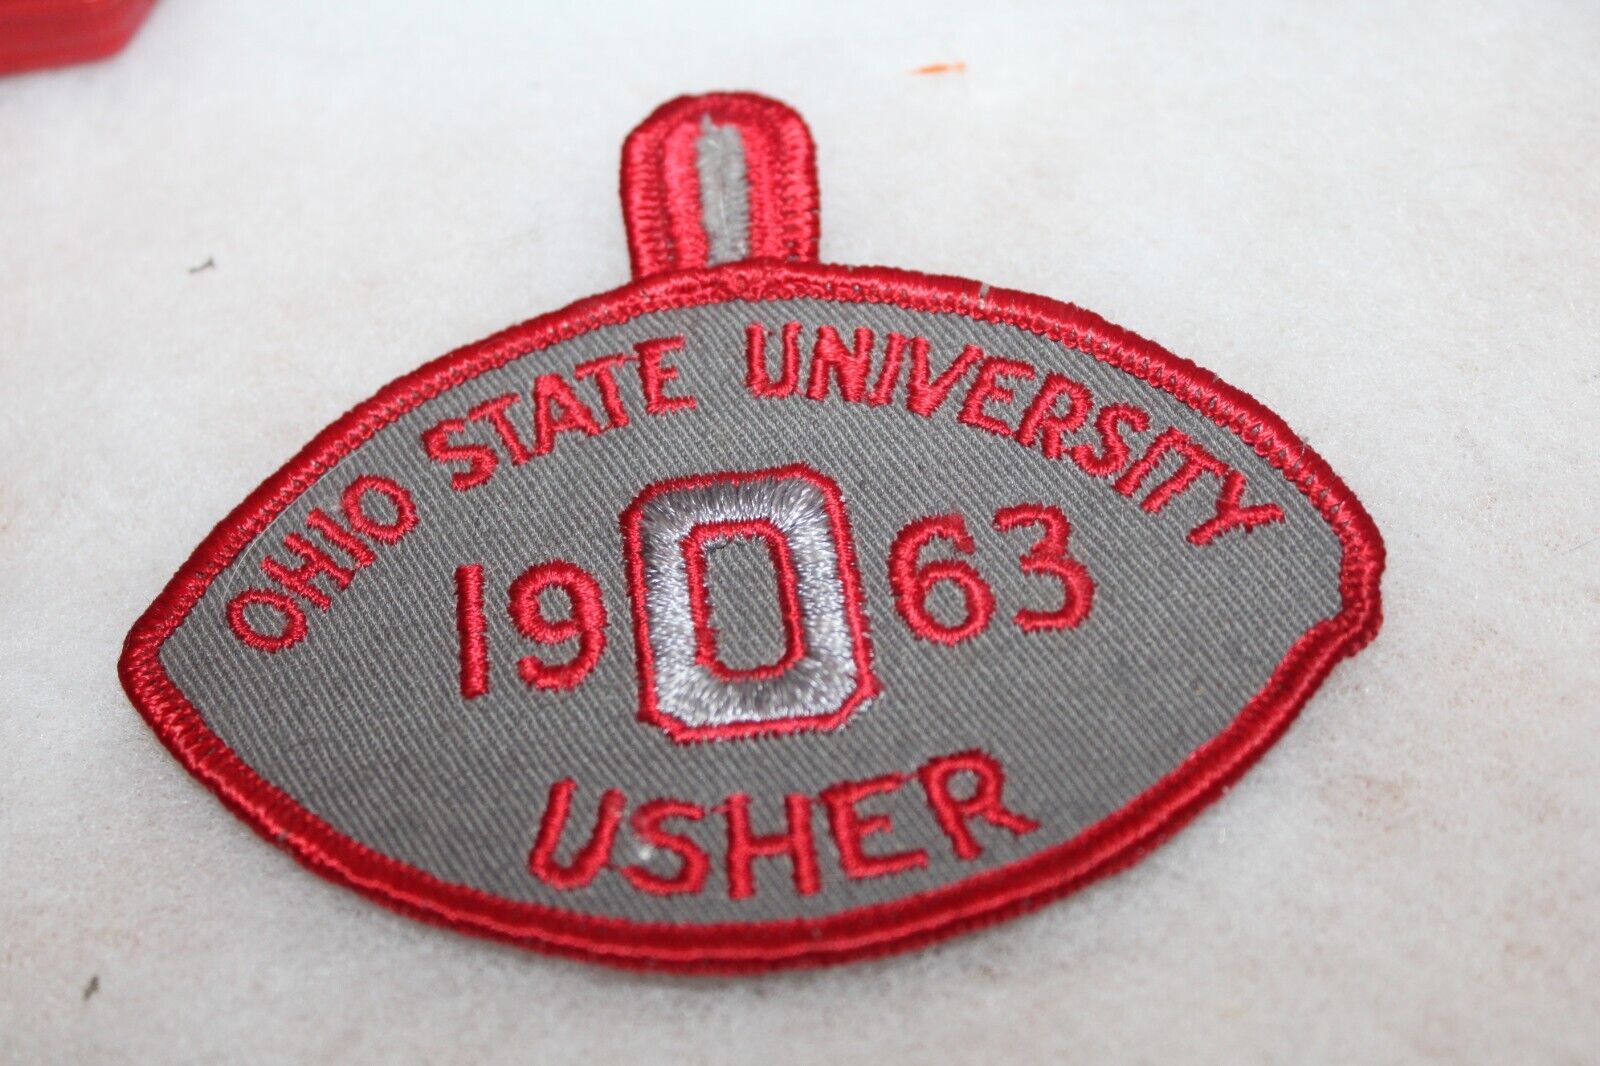 1963 Ohio State University Boy Scout Usher Patch [CT282]